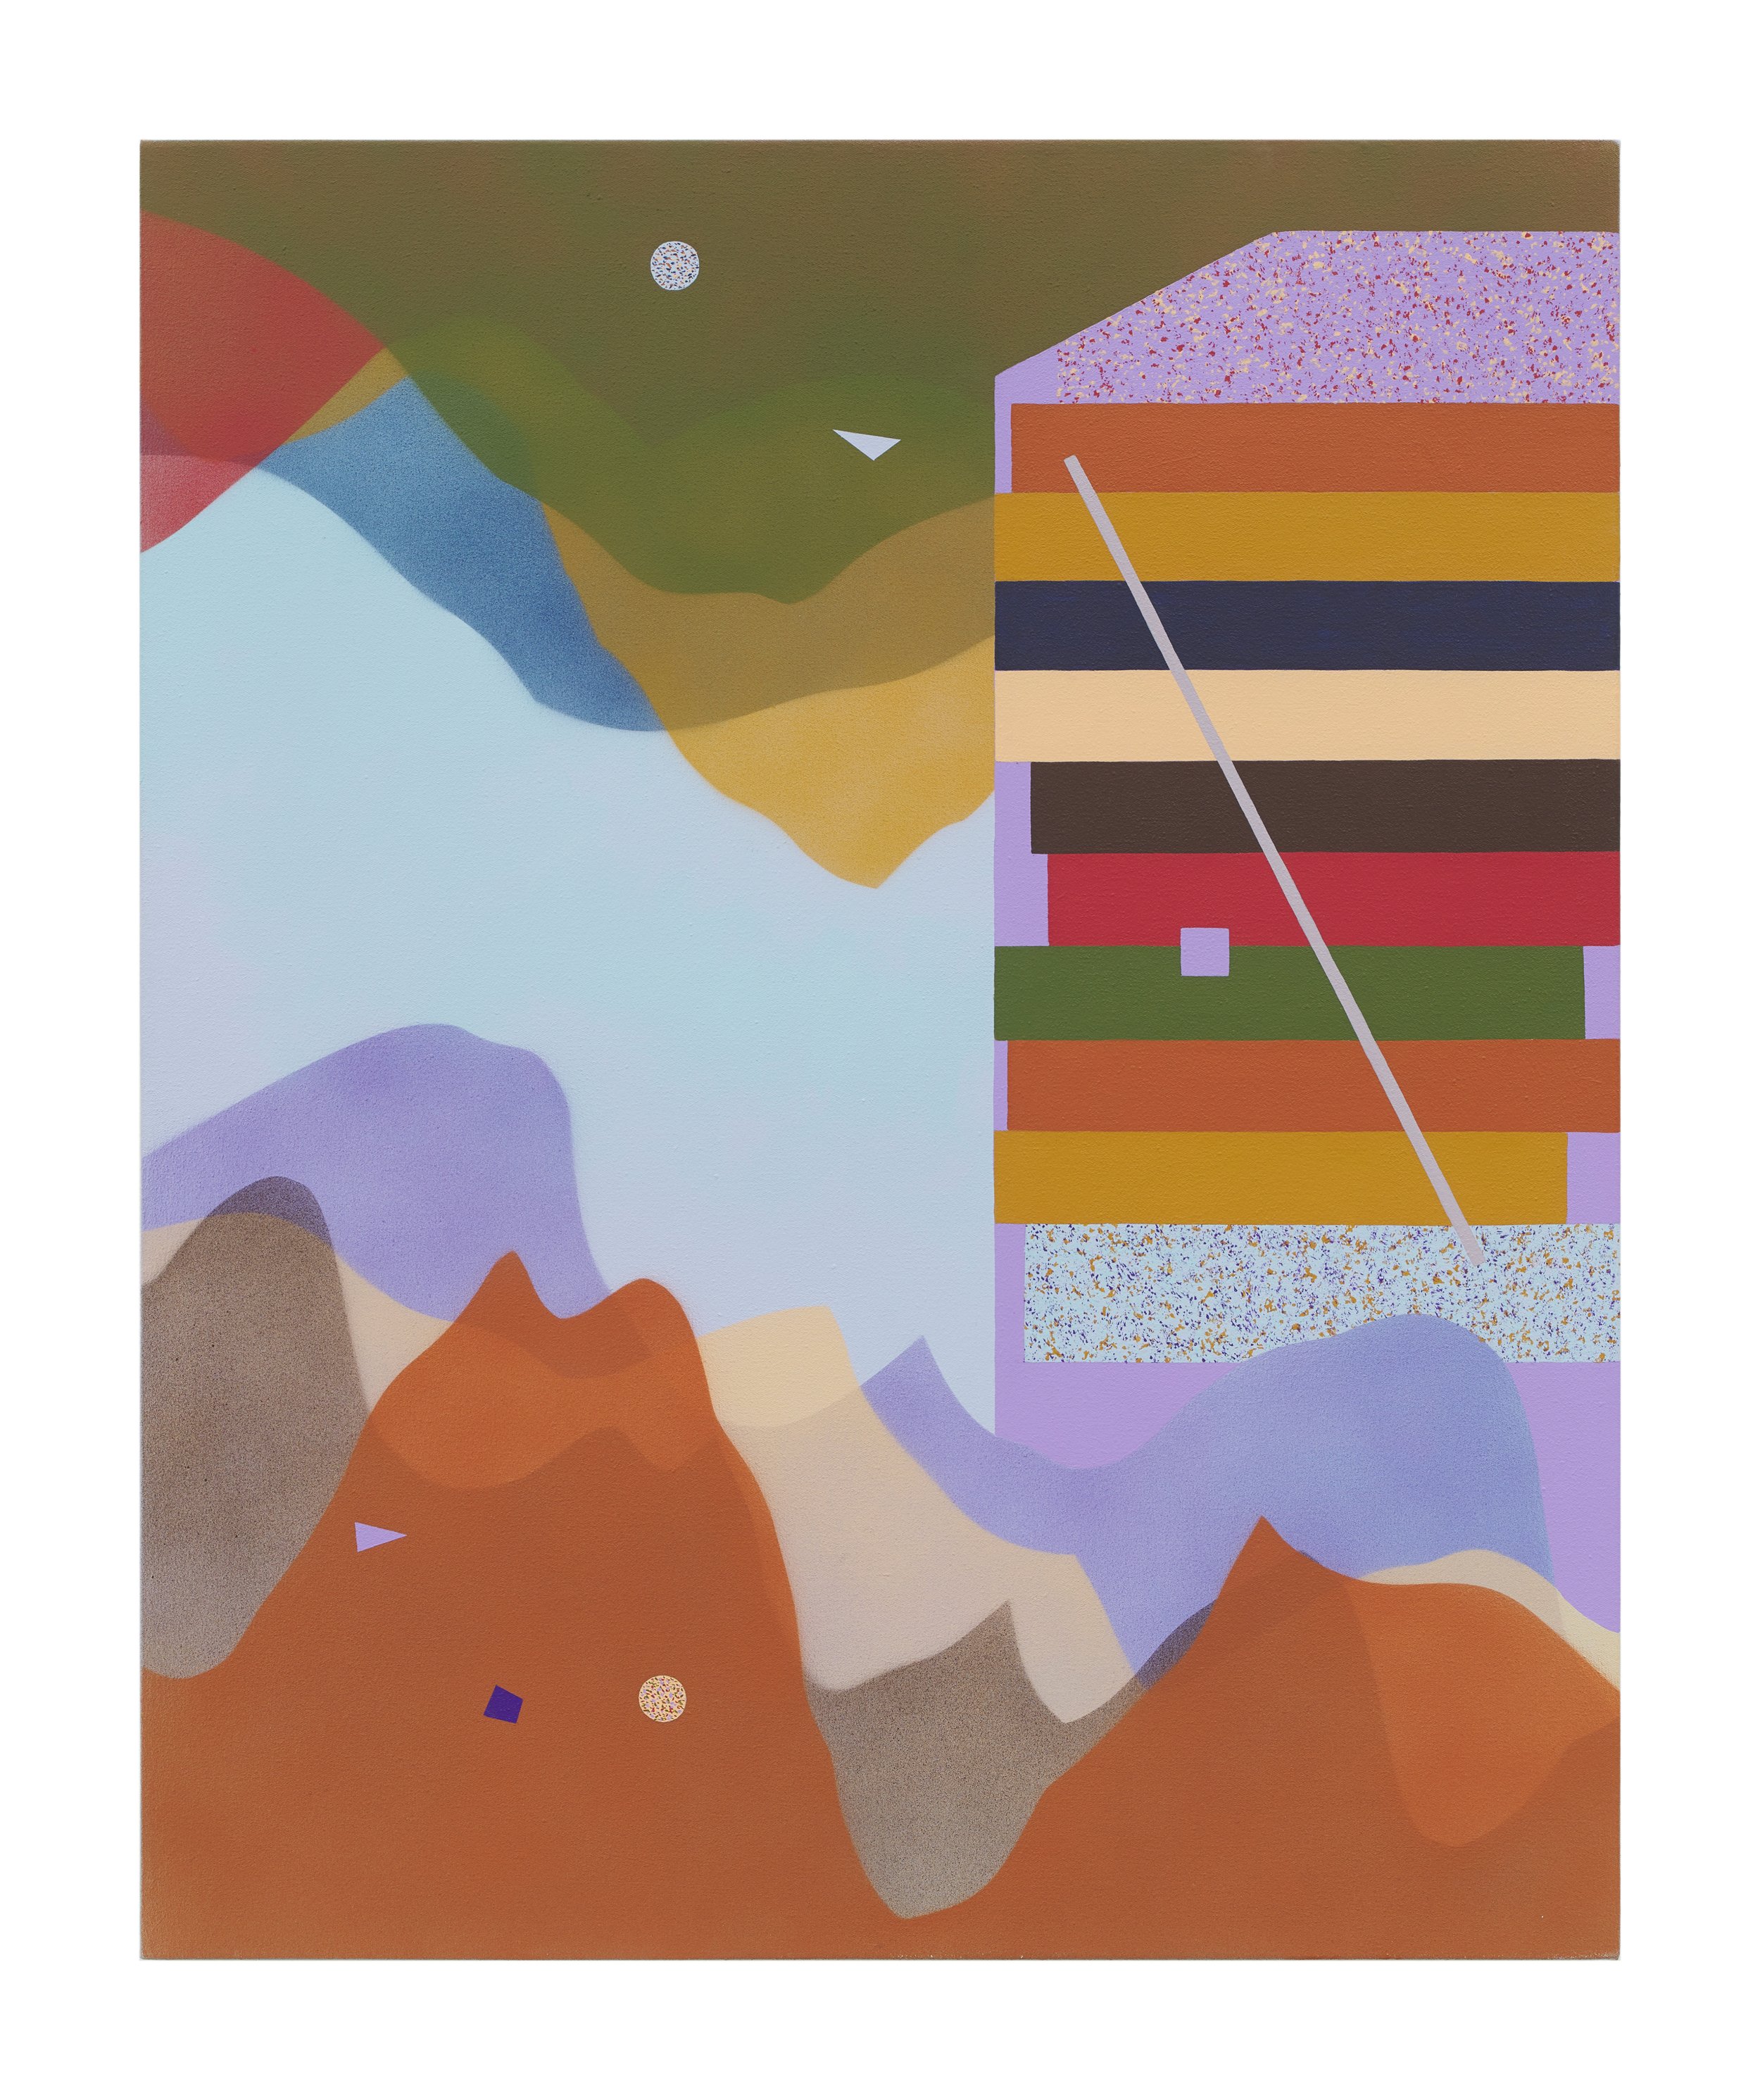  Franziska Goes  kleines Landschaftsbild (Little Landscape Painting) , 2021 Acrylic on canvas 31 1/2 x 25 1/2 x 1 1/4 inches&nbsp; 